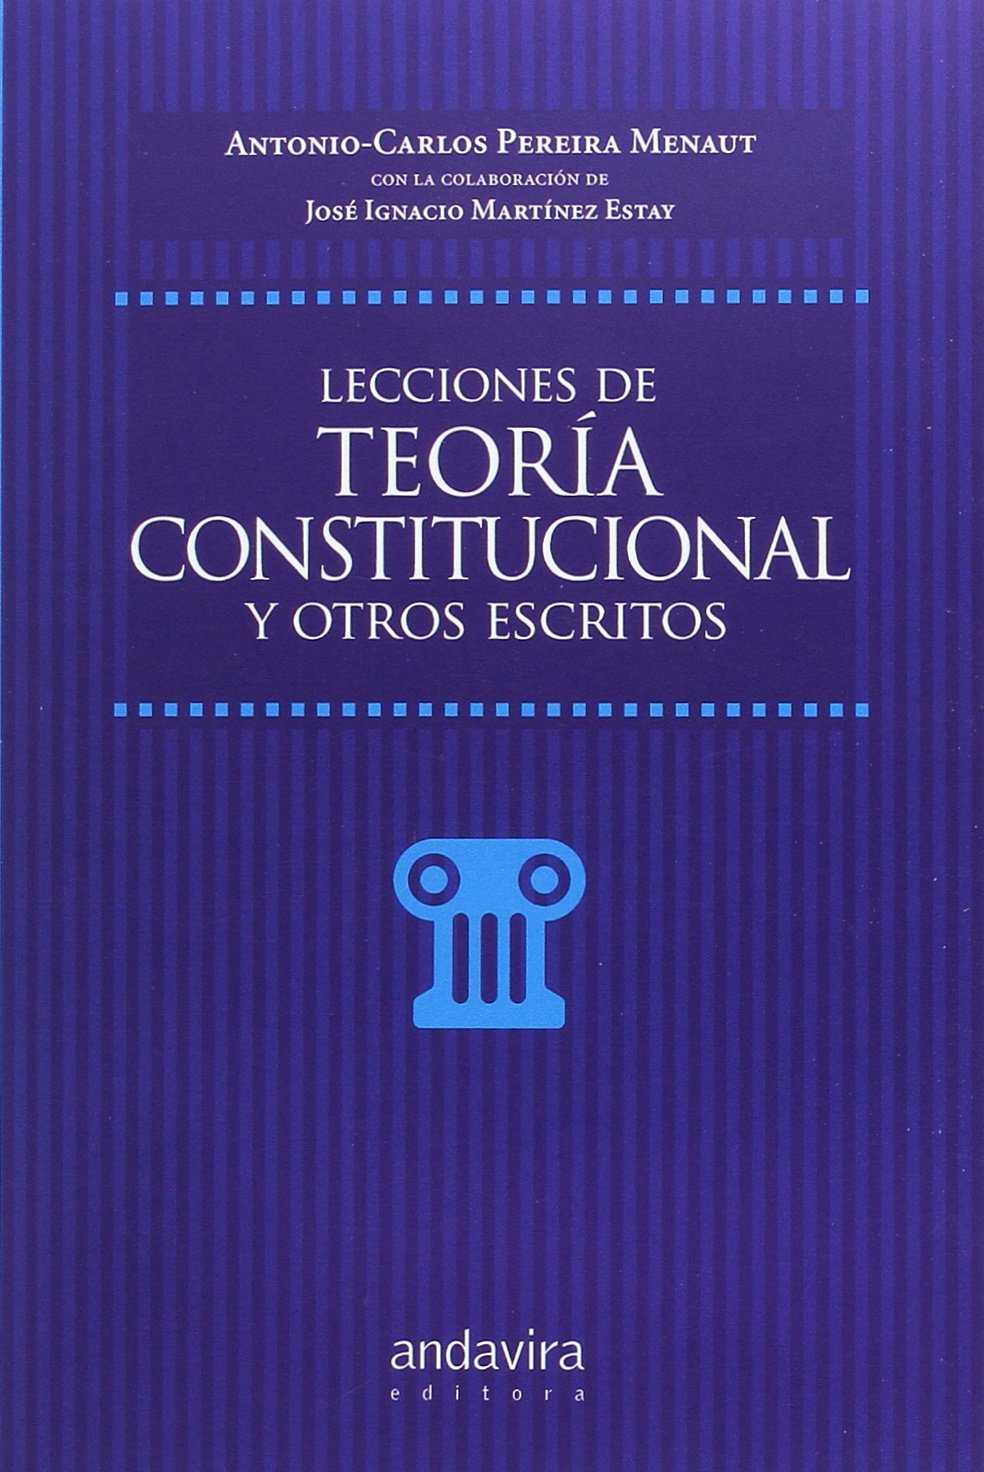 LECCIONES DE TEORIA CONSTITUCIONAL